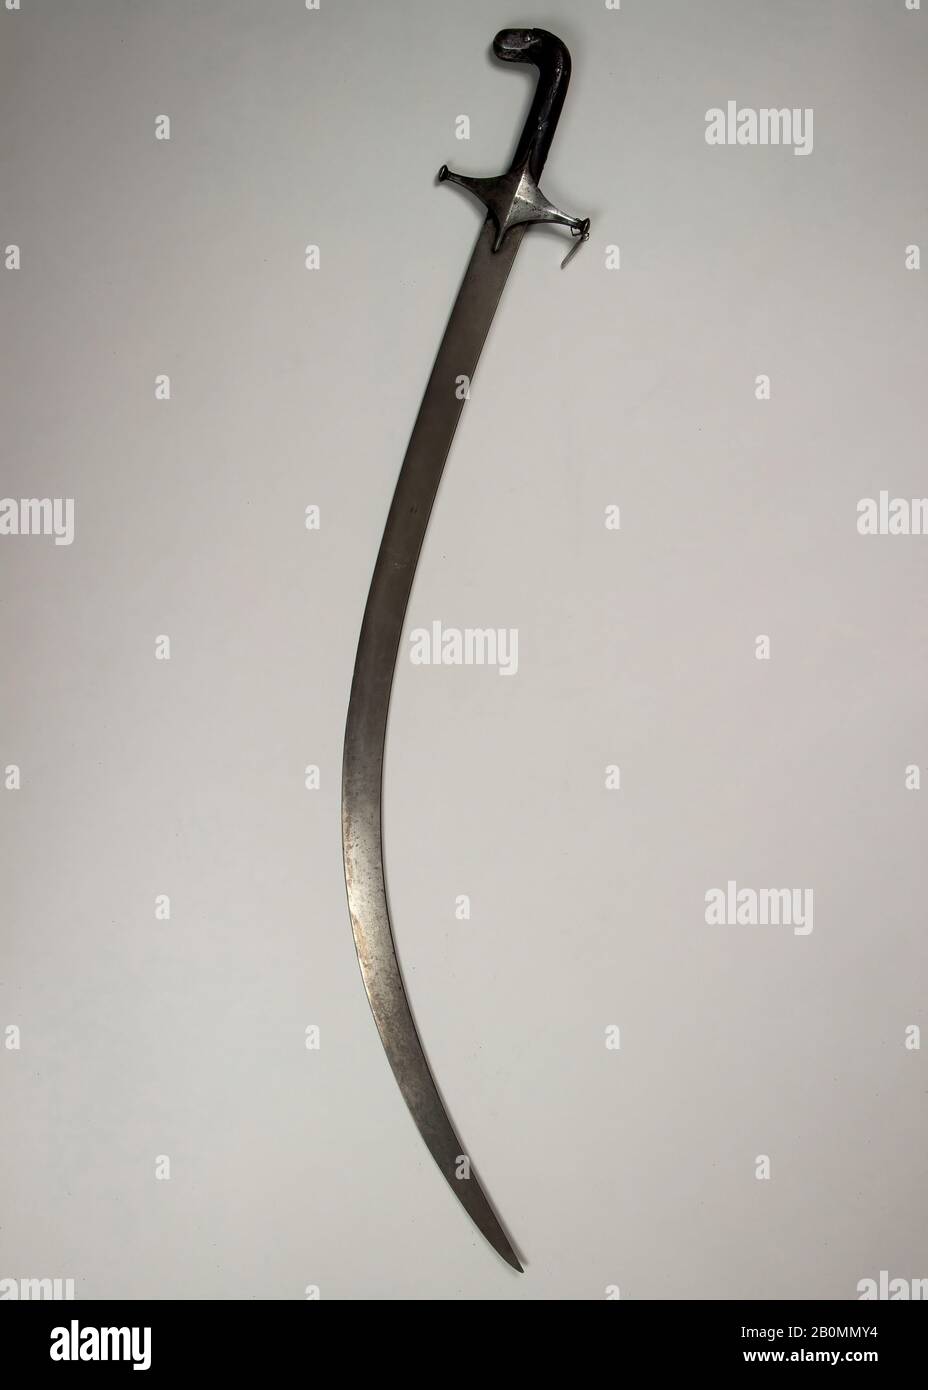 Persian sword -Fotos und -Bildmaterial in hoher Auflösung – Alamy